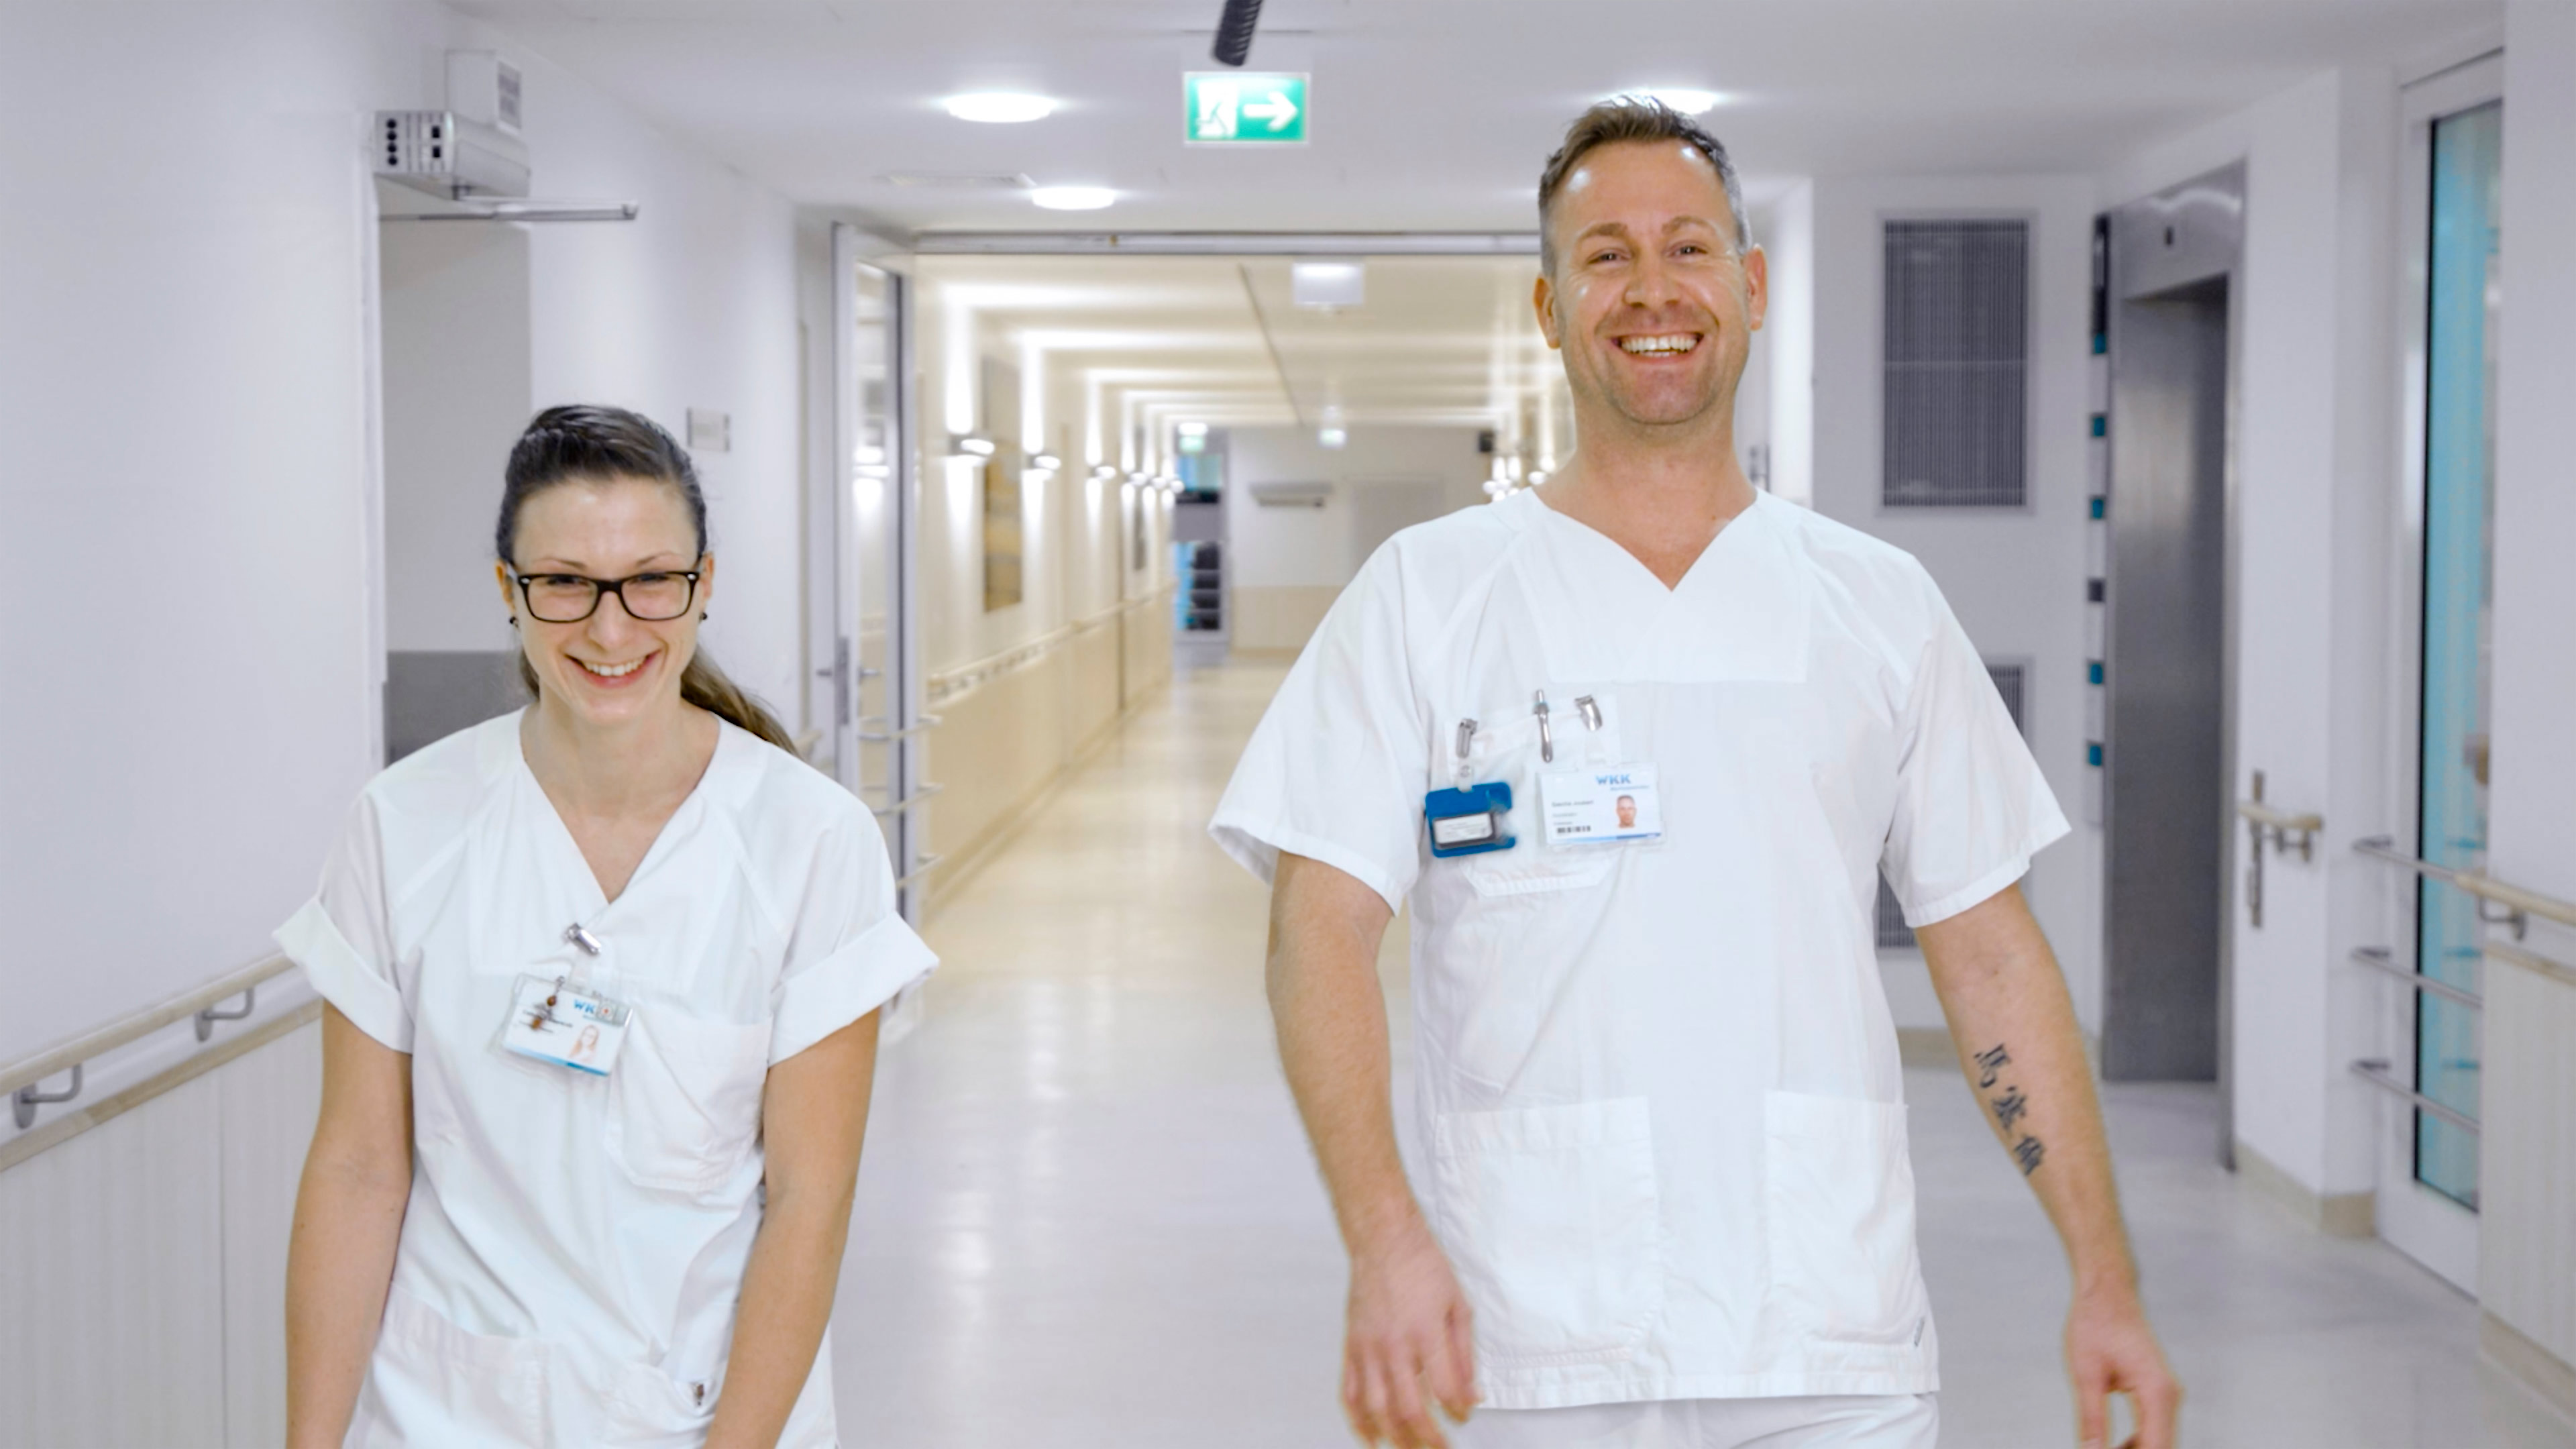 Zwei Krankenpfleger gehen einen Flur entlang